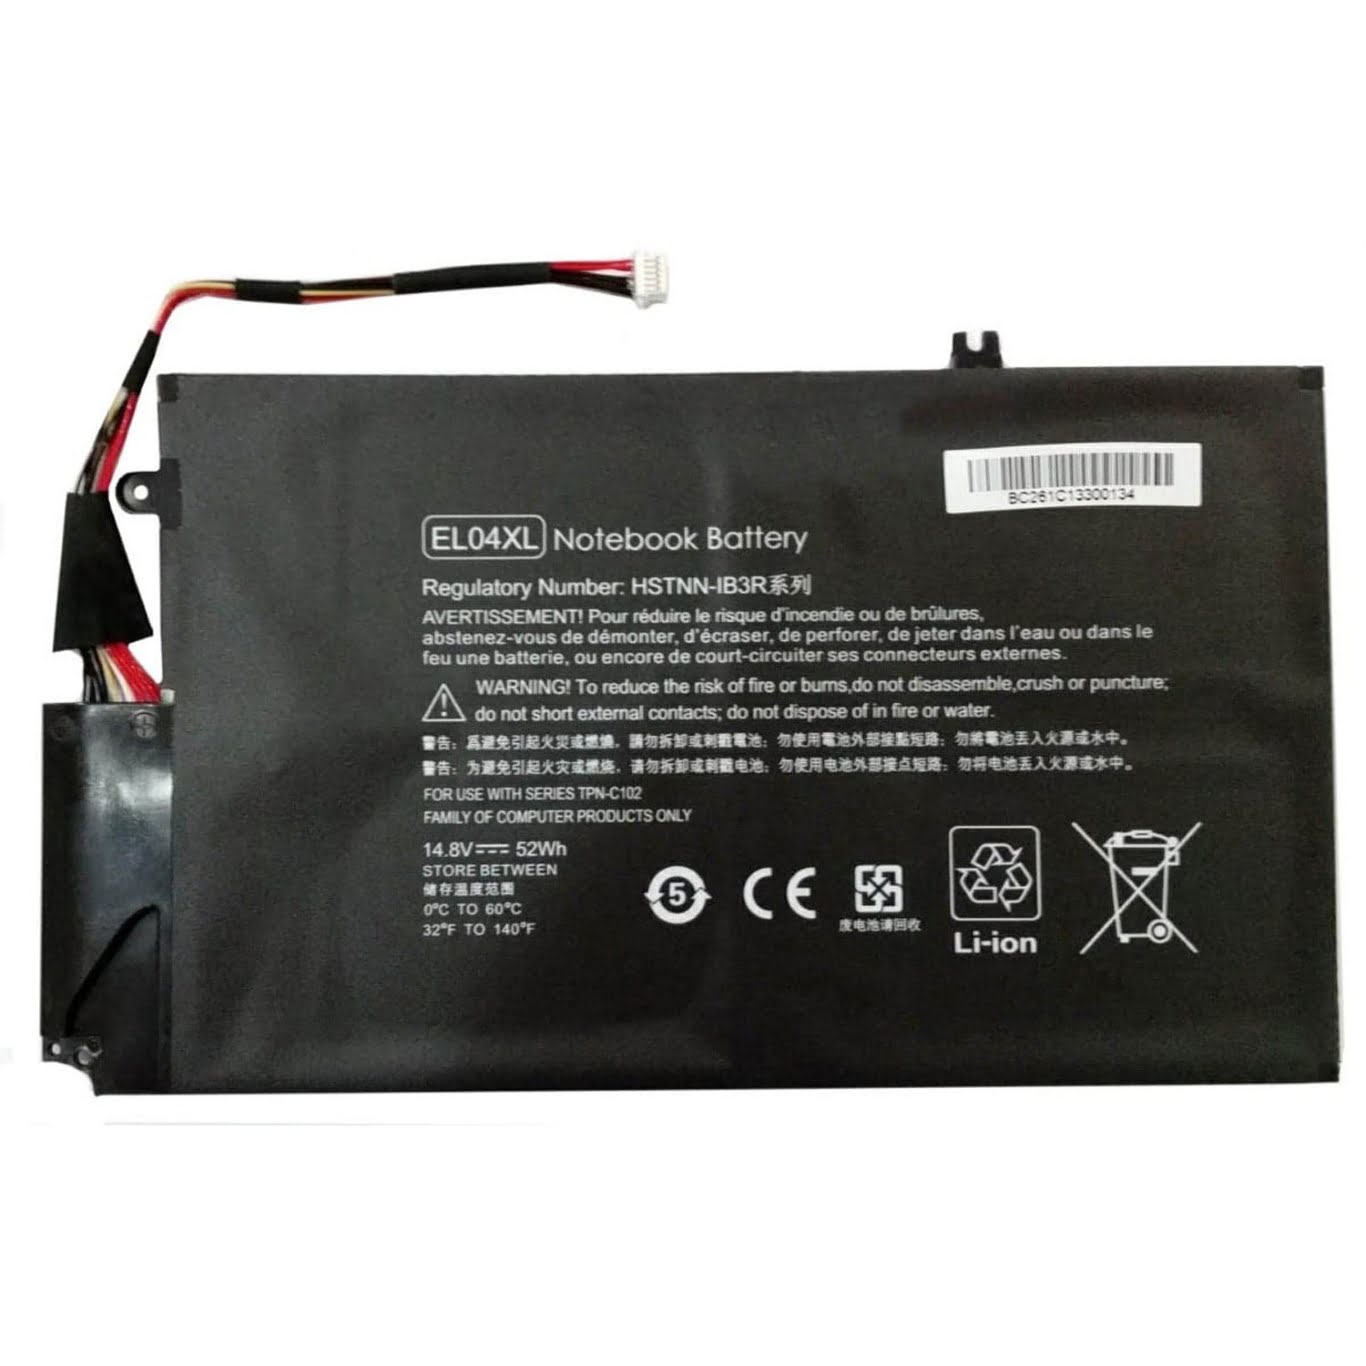 Hp 681879-1c1, 681879-121 Laptop Battery For Envpr4 I5-3317u, Envy 4 Series replacement